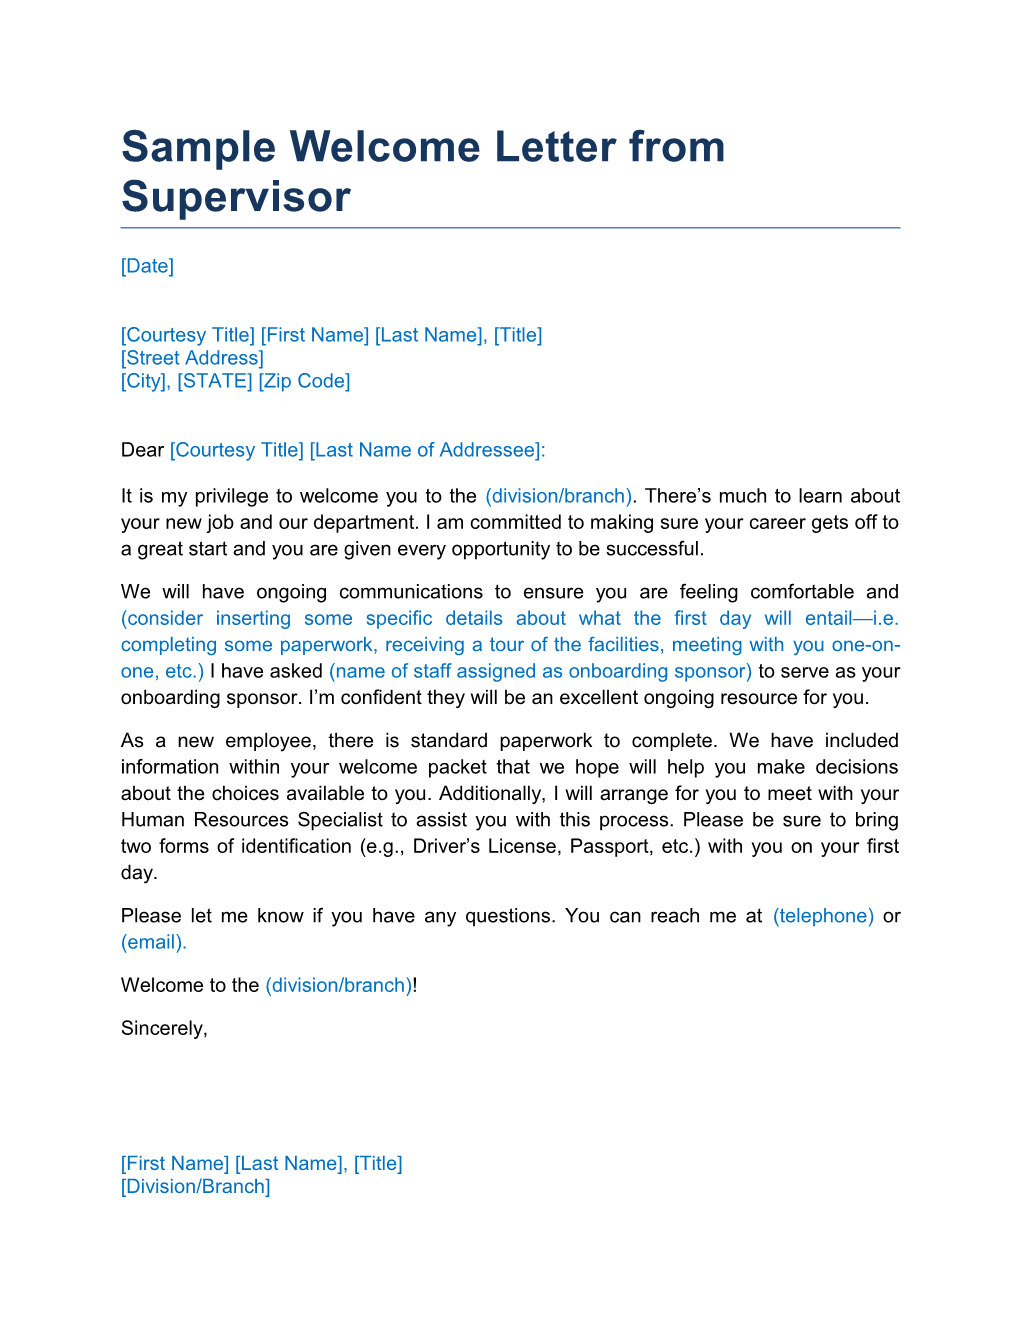 Sample Welcome Letter from Supervisor